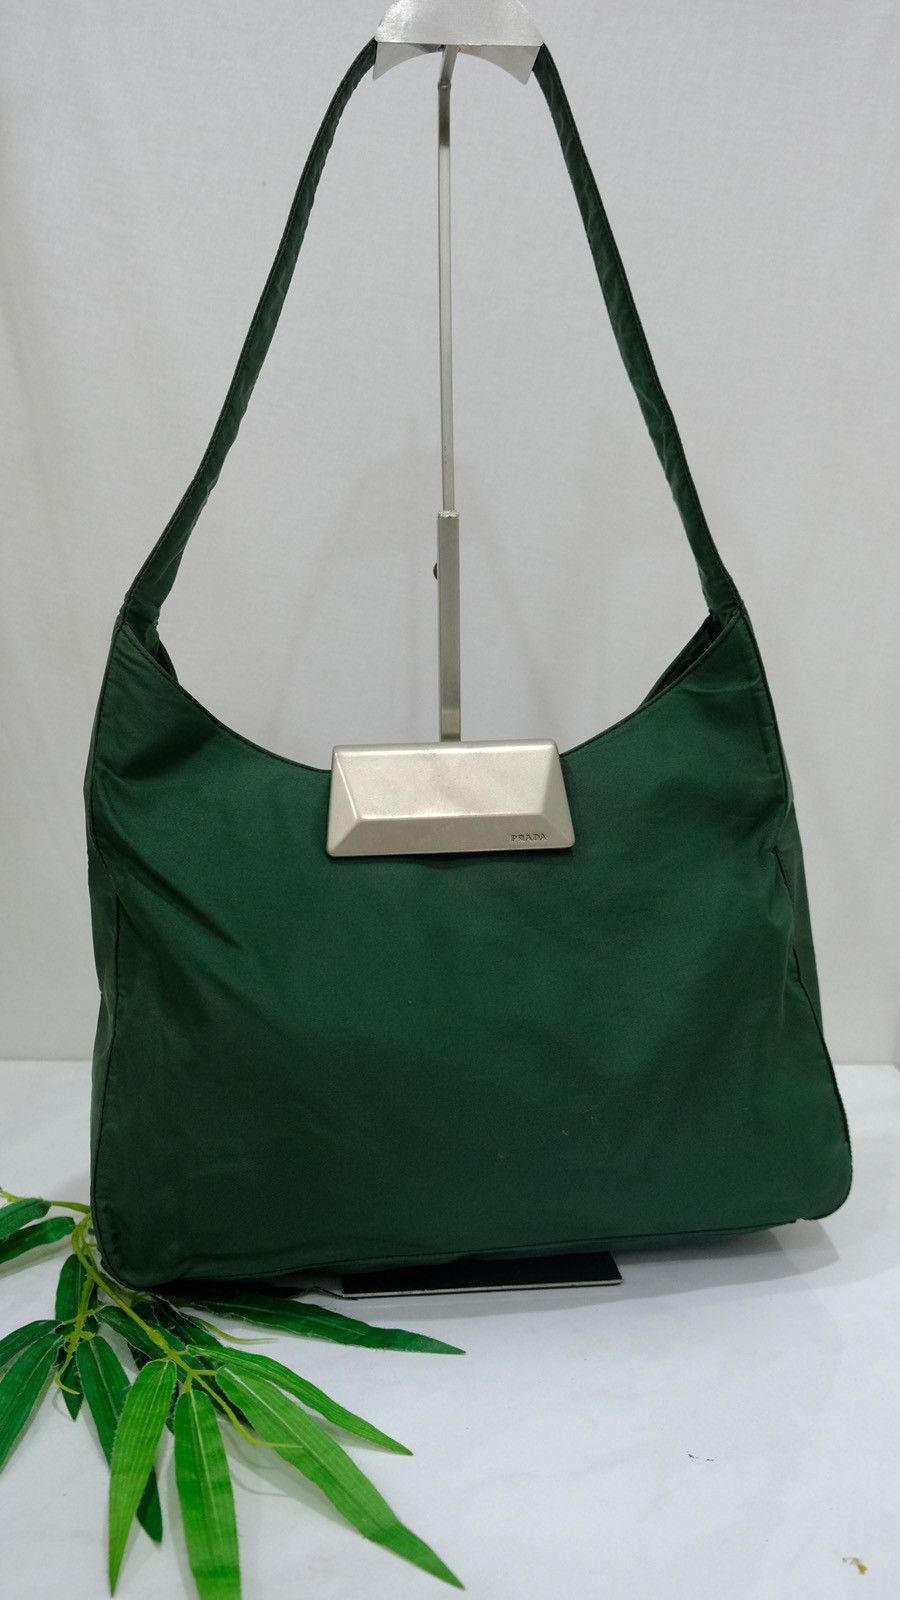 Authentic Prada green nylone hobo/shoulder bag - 2